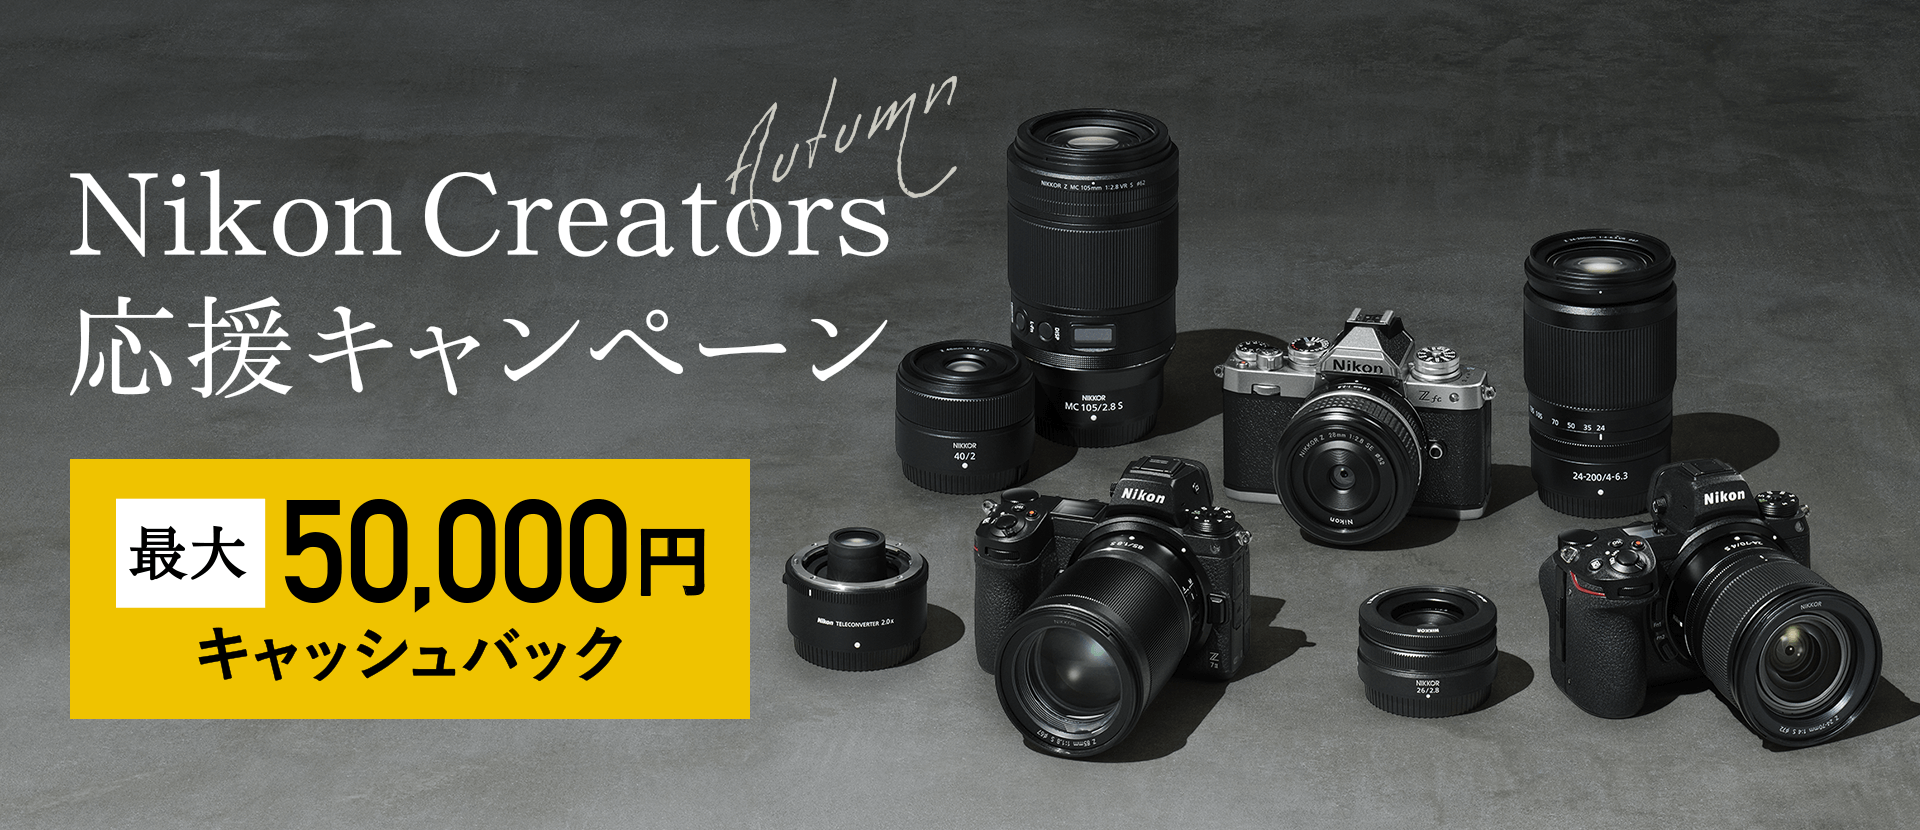 Nikon Creators 応援オータムキャンペーン 最大50,000円キャッシュバック